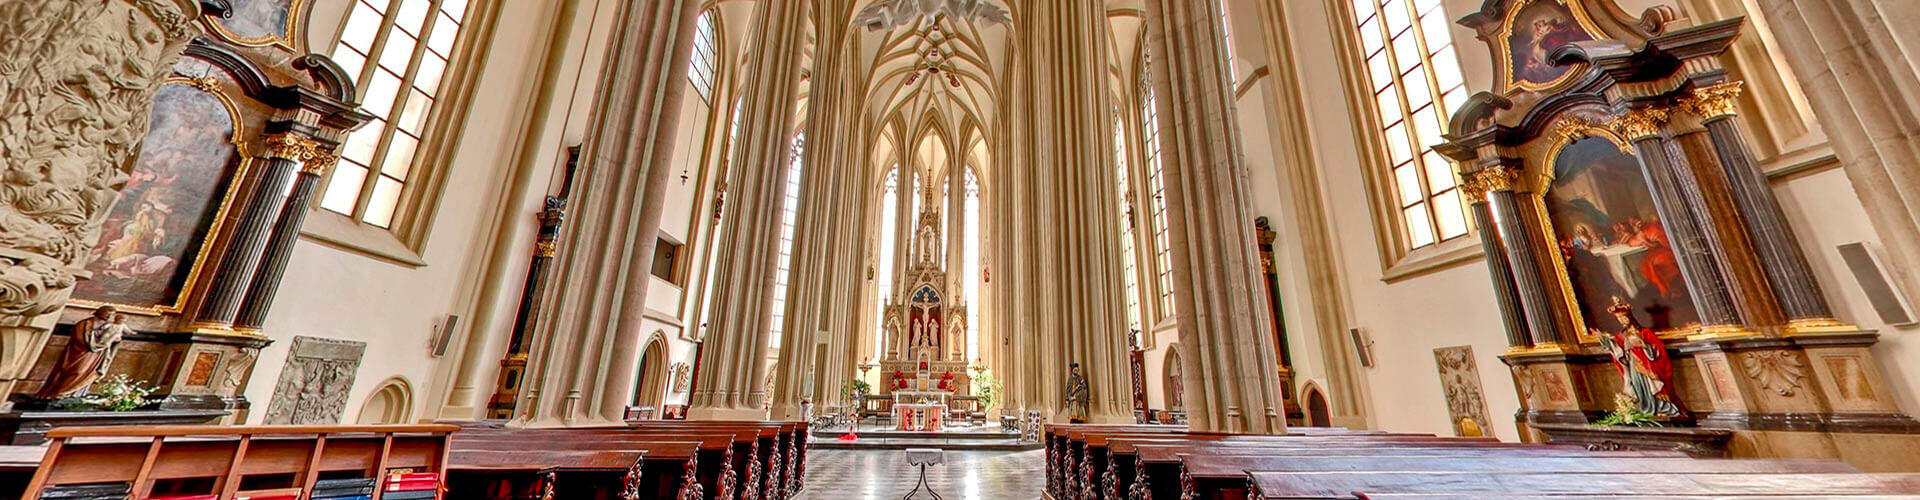 Kostel sv. Jakuba, Brno, magazín Kult* Brno